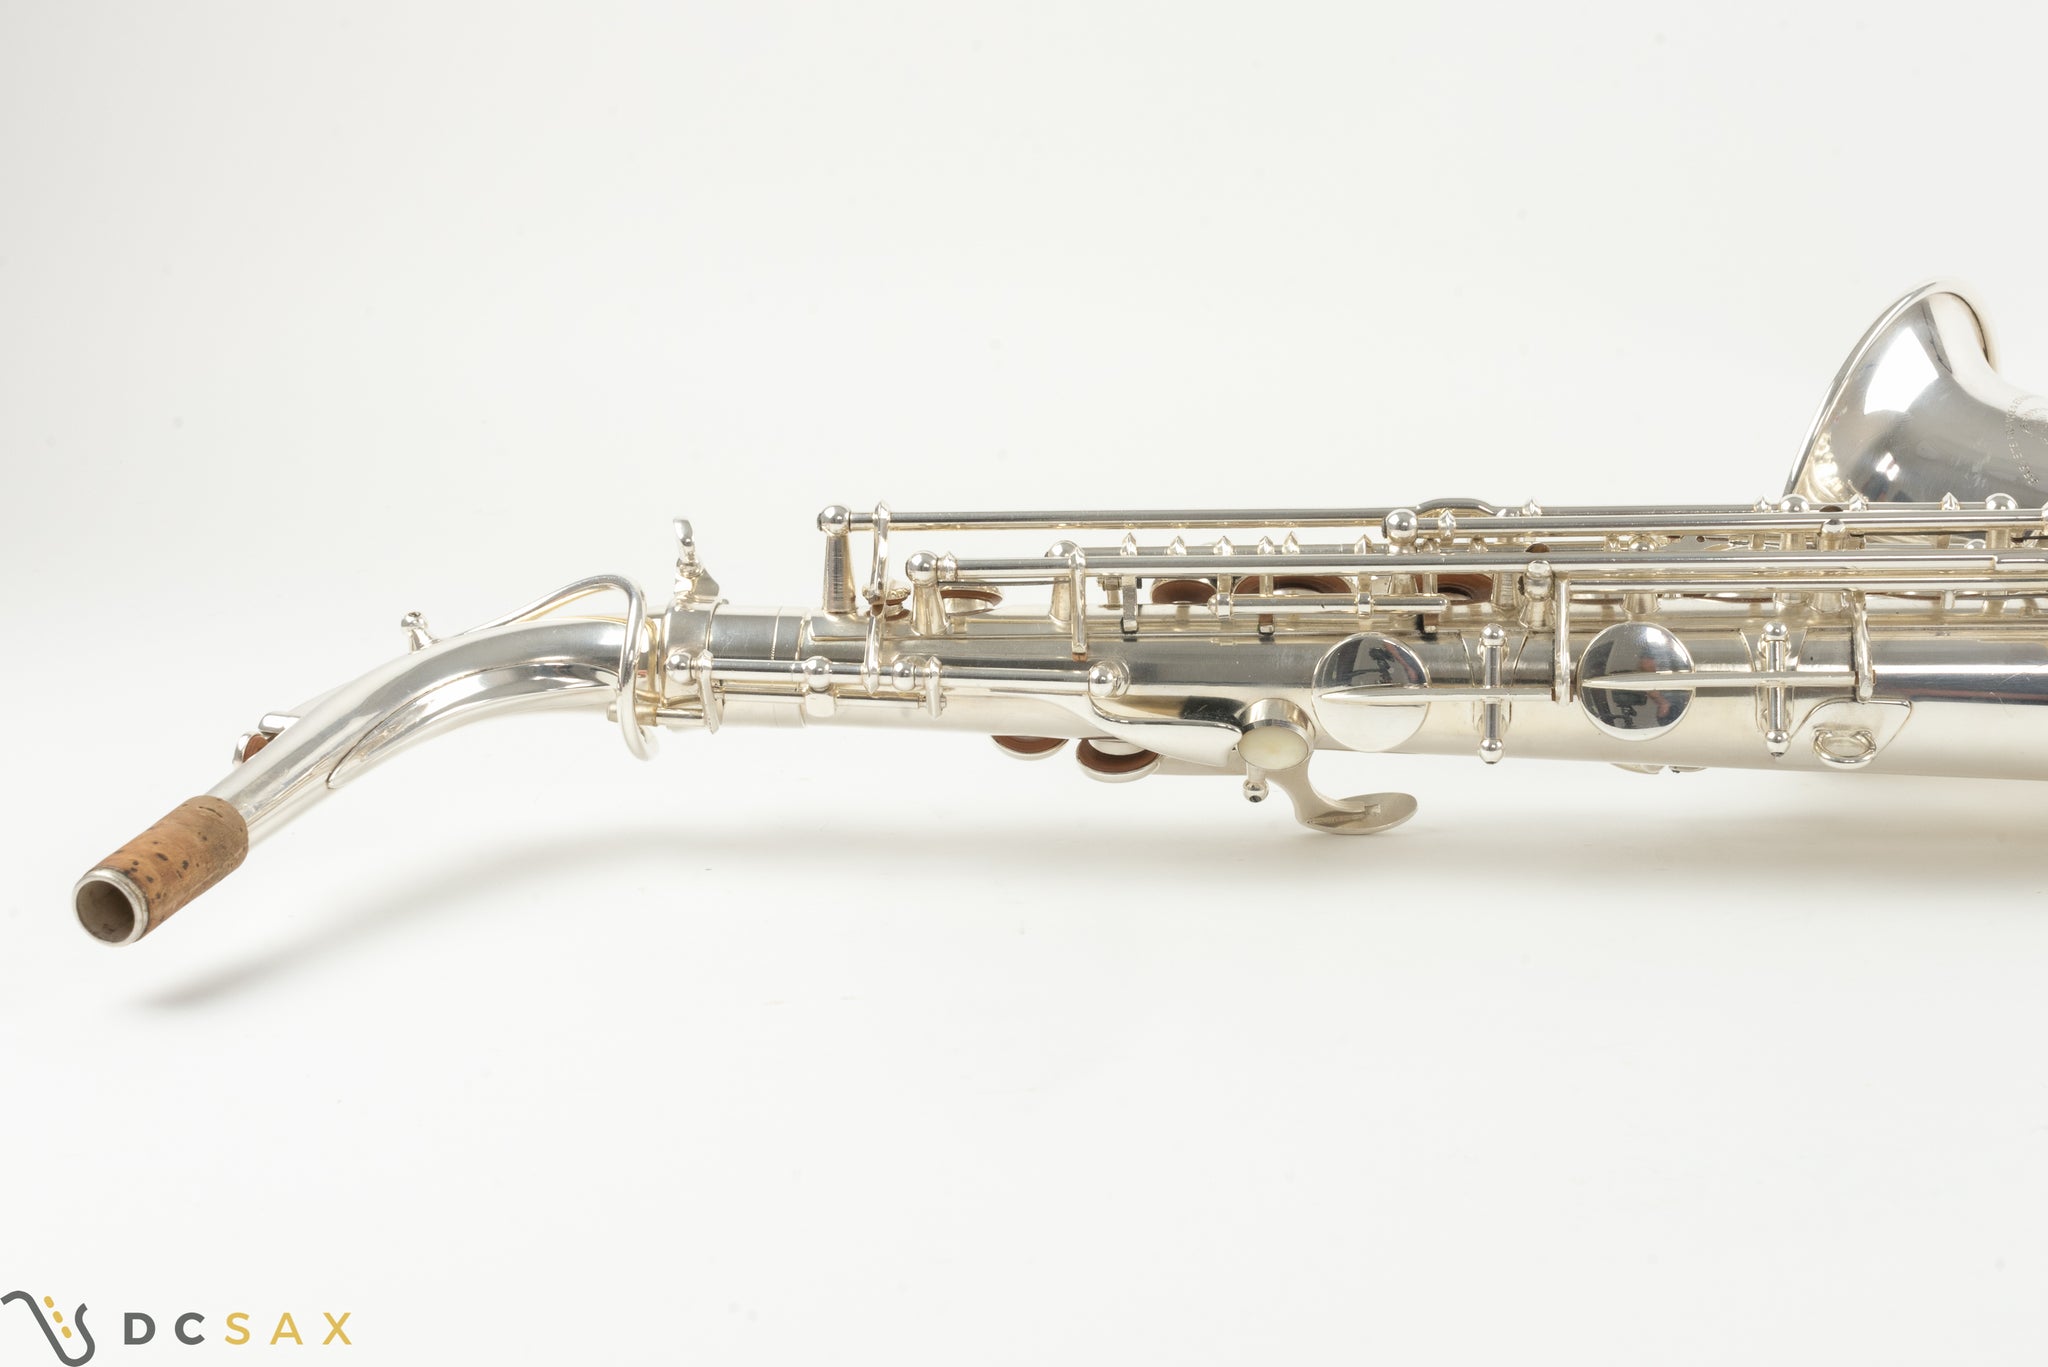 1952 51,xxx Selmer Super Balanced Action Alto Saxophone, Near Mint, Silver Plated, Fresh Overhaul, Video